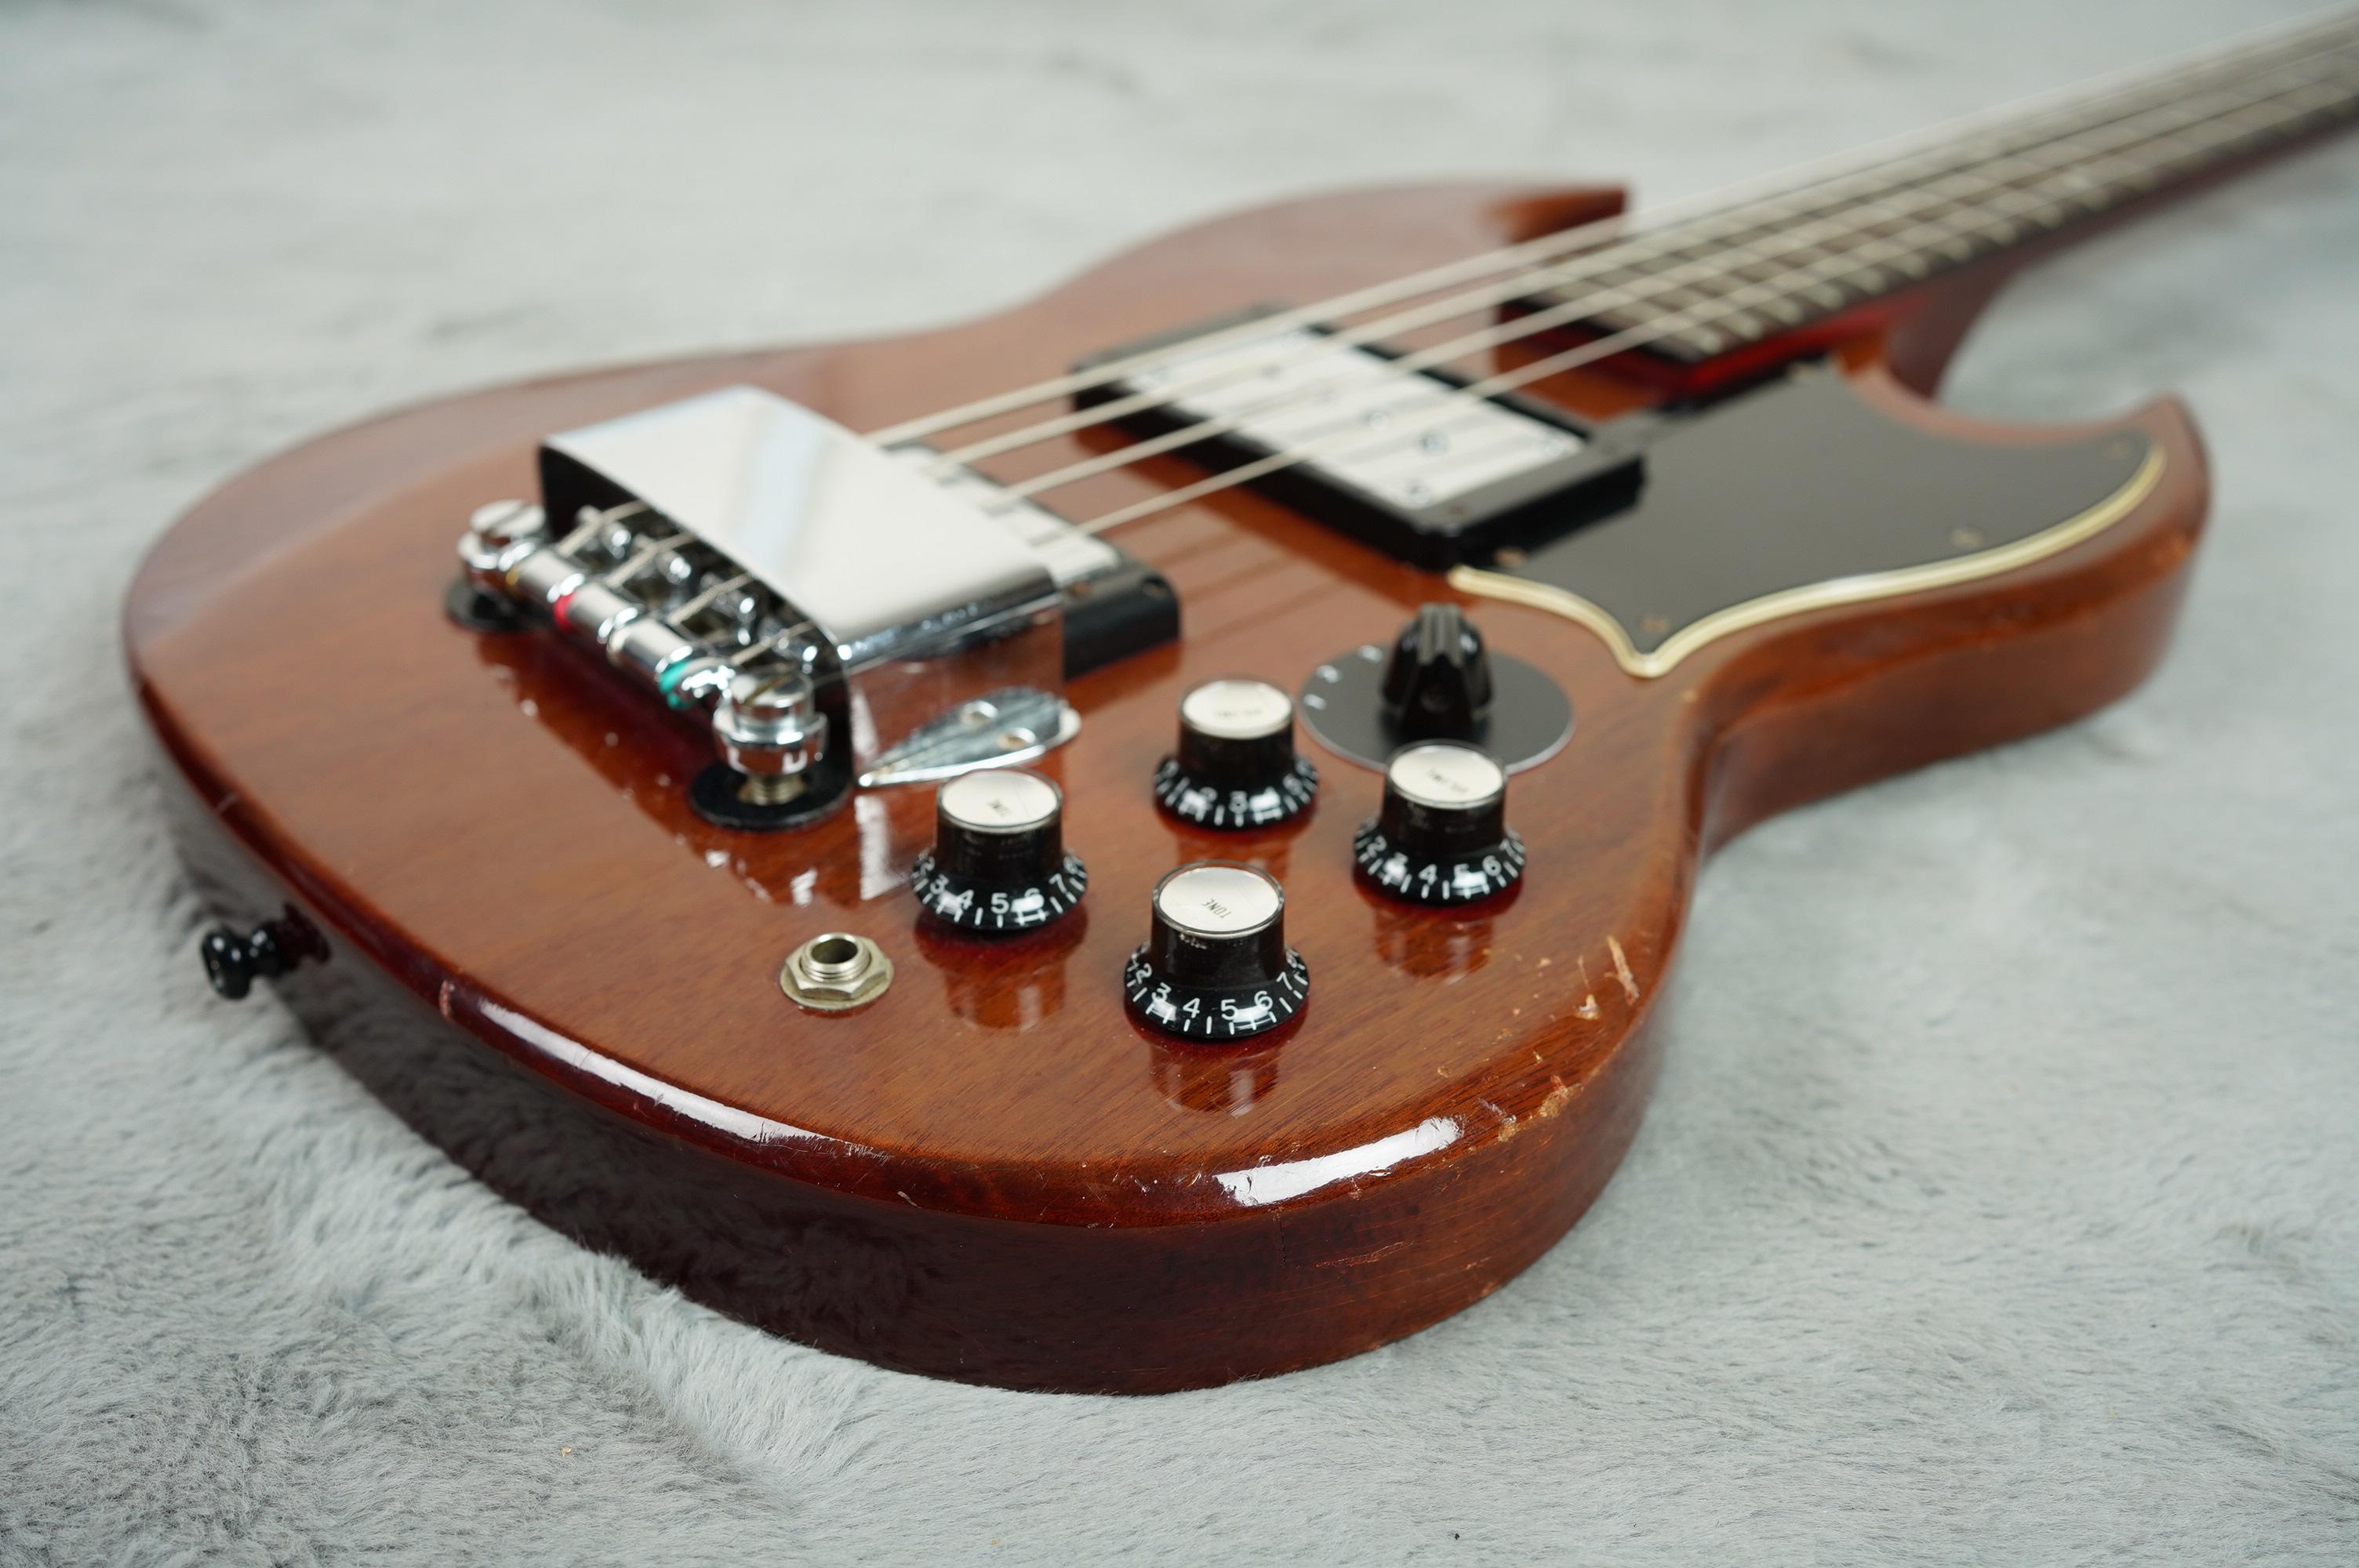 1973 Gibson EB-3